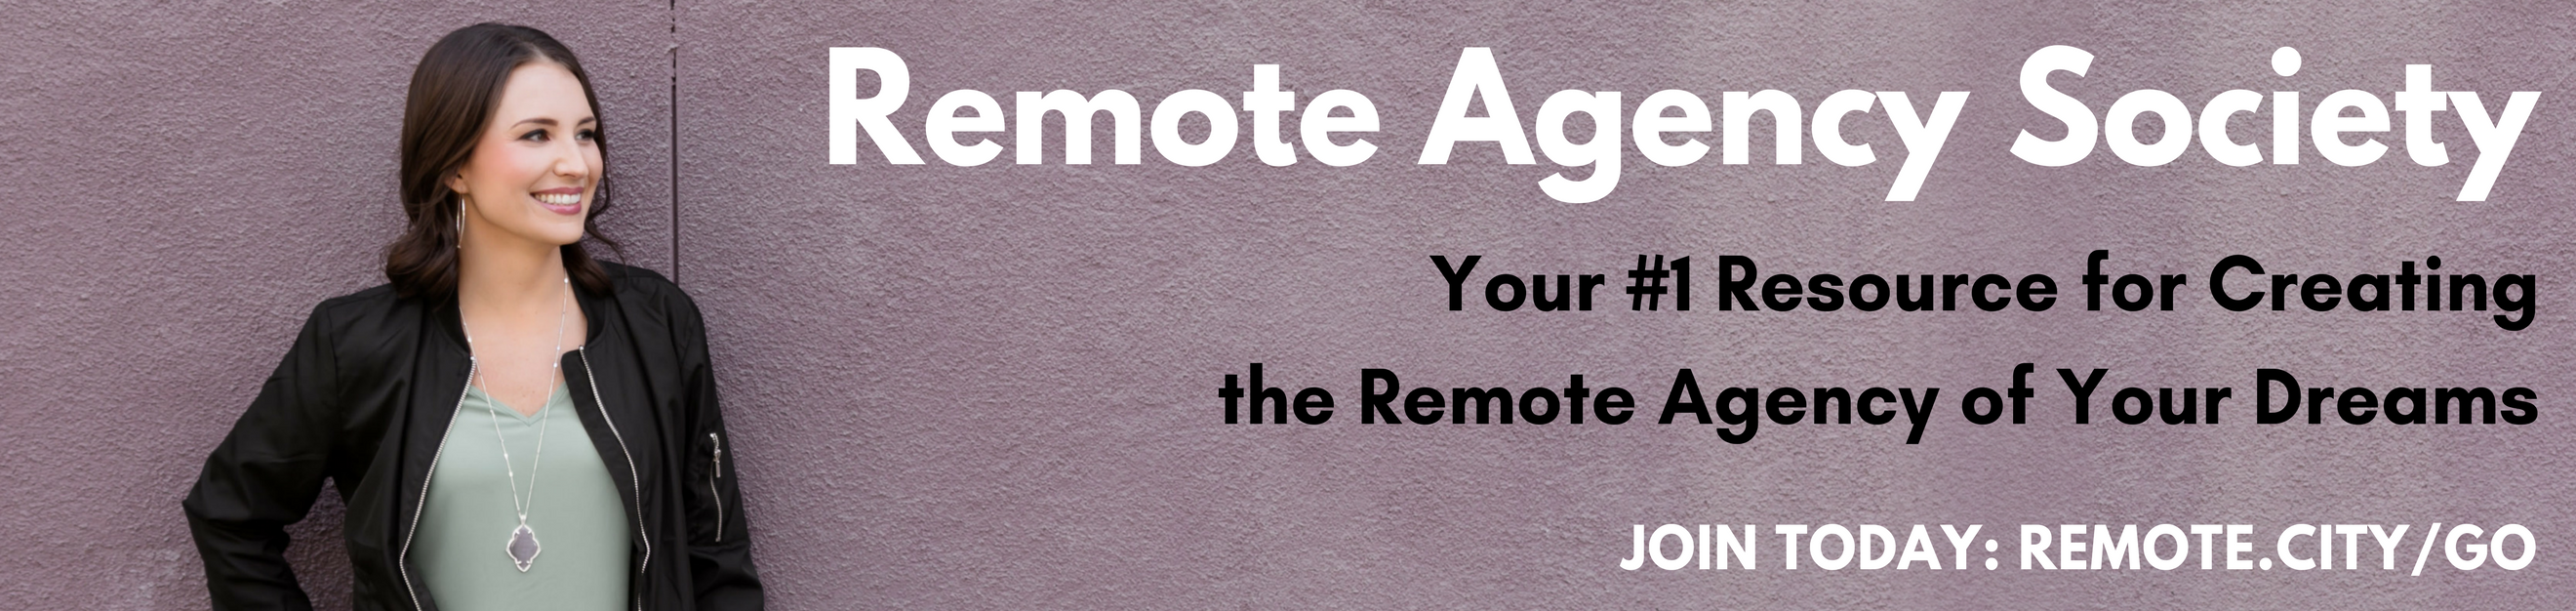 Remote Agency Society Mod Girl Marketing